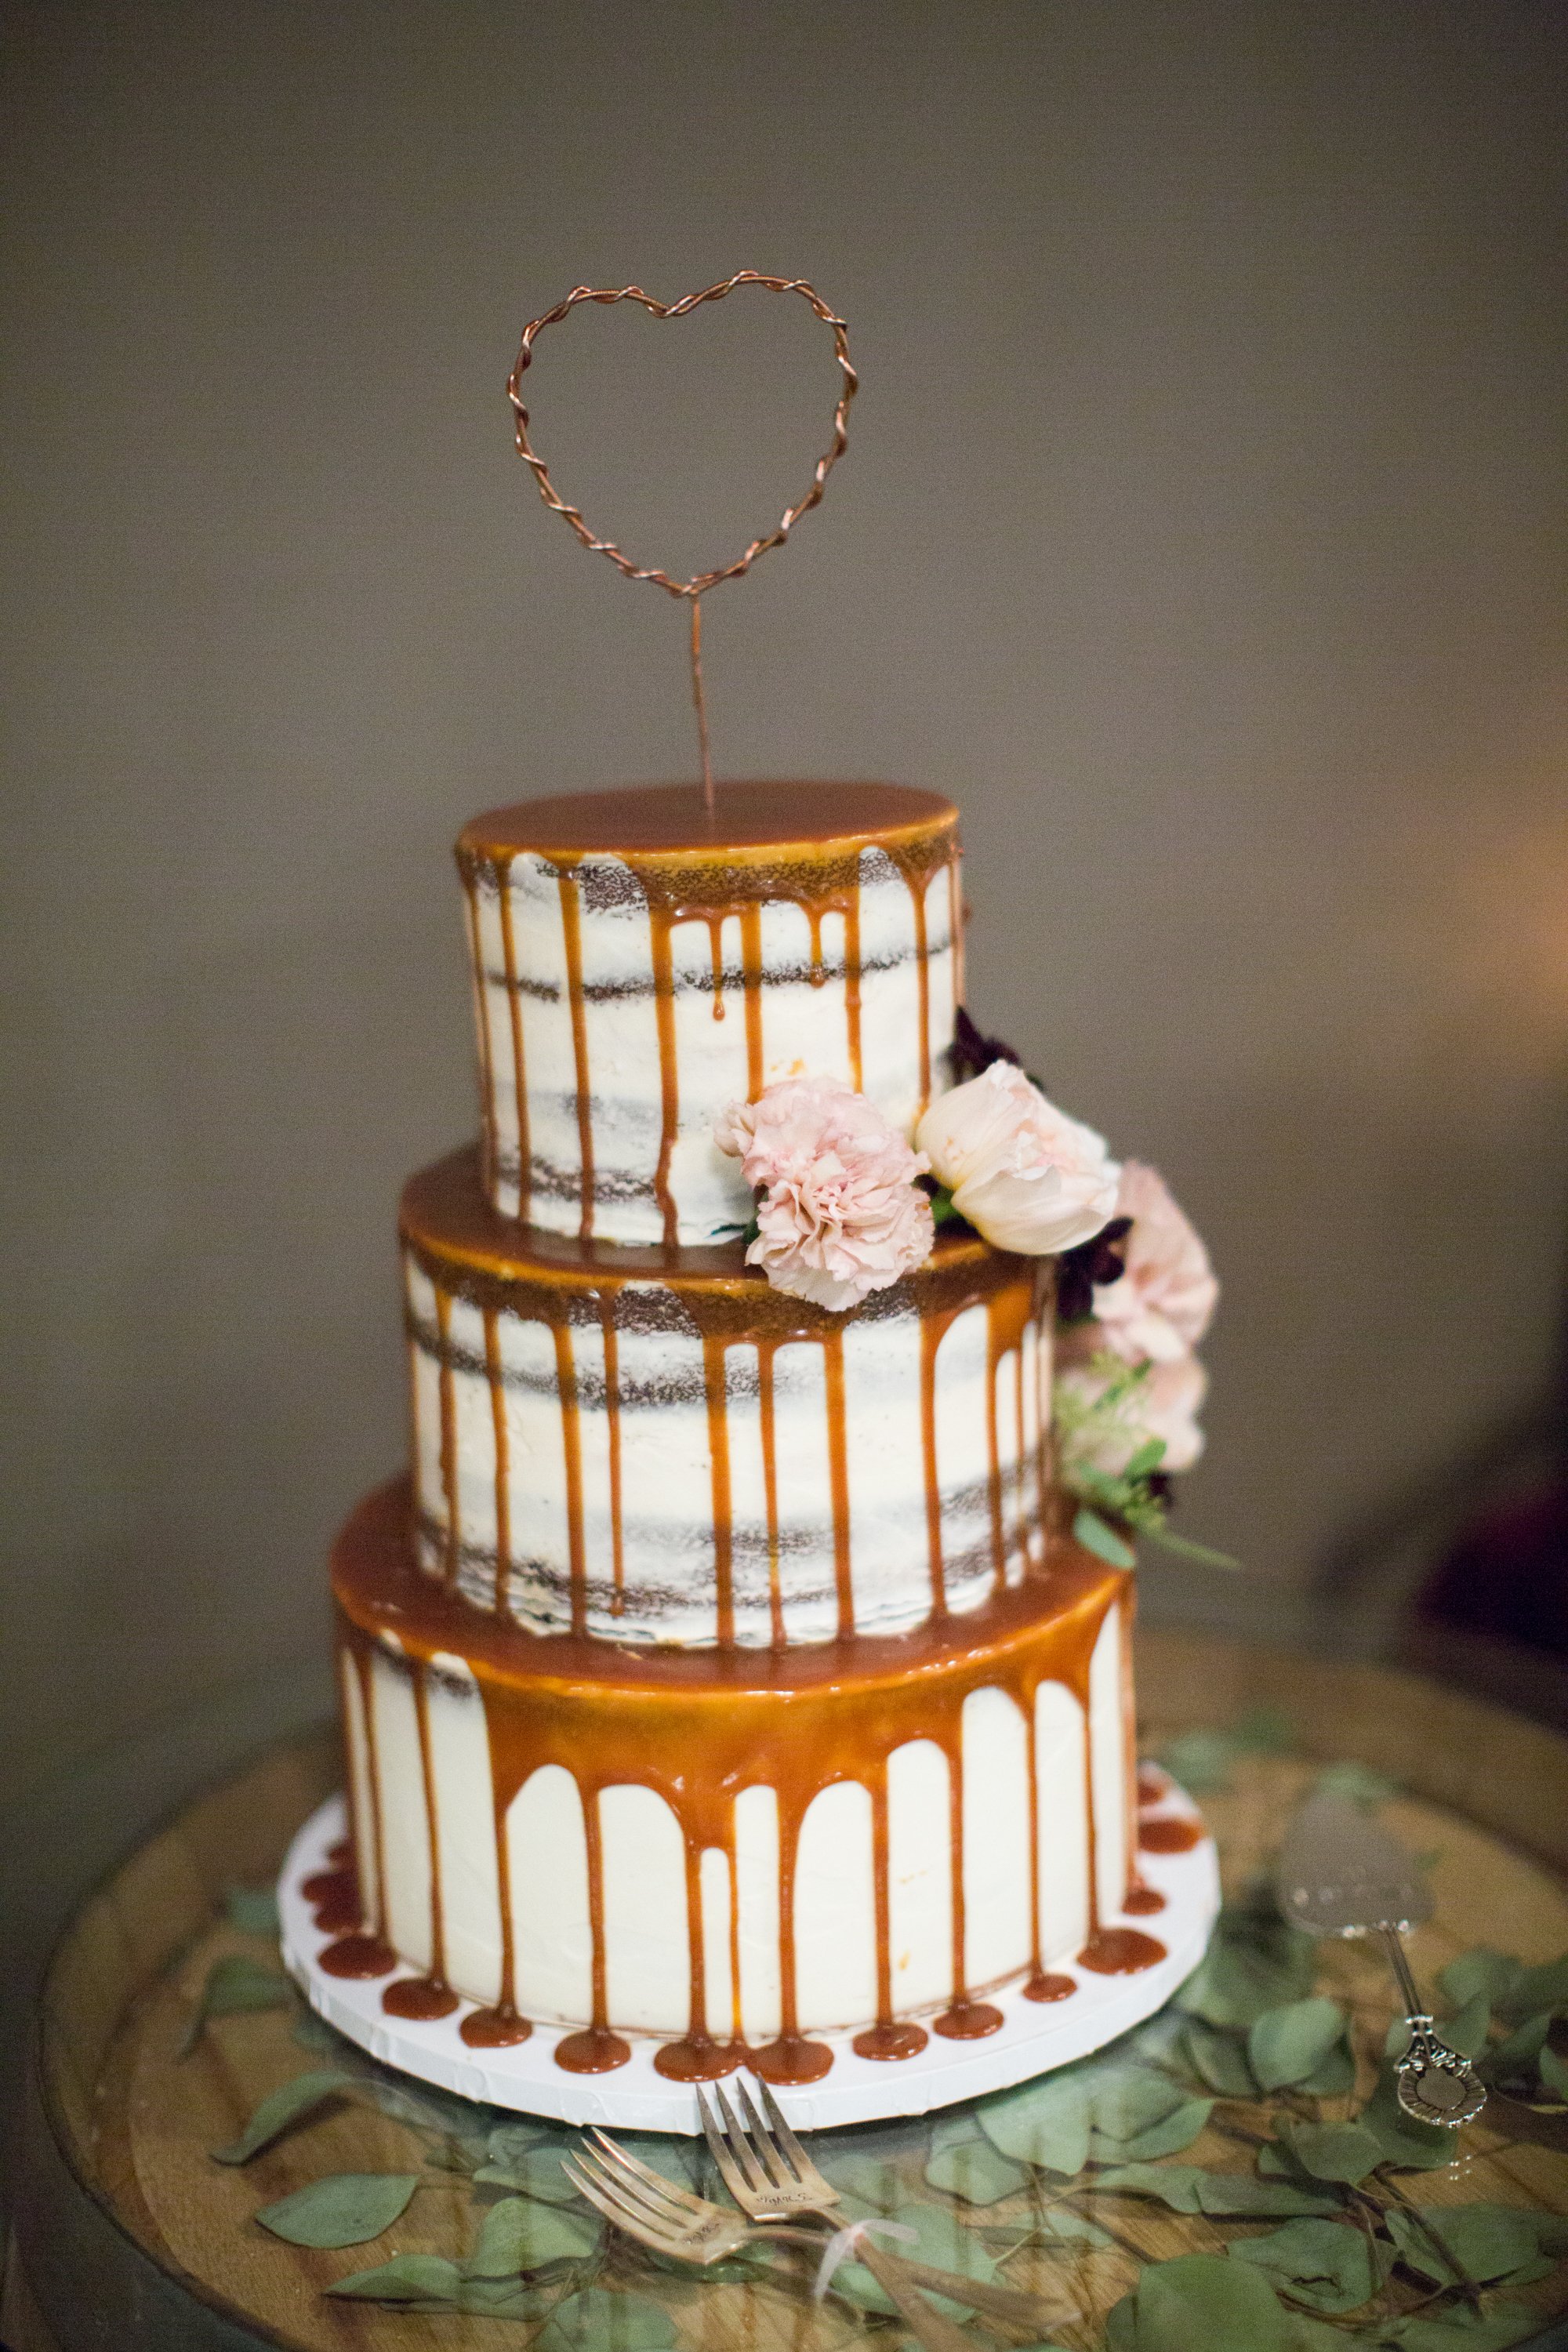 Amys-Cupcake-Shoppe-wedding-cakes-salted-caramel.jpg